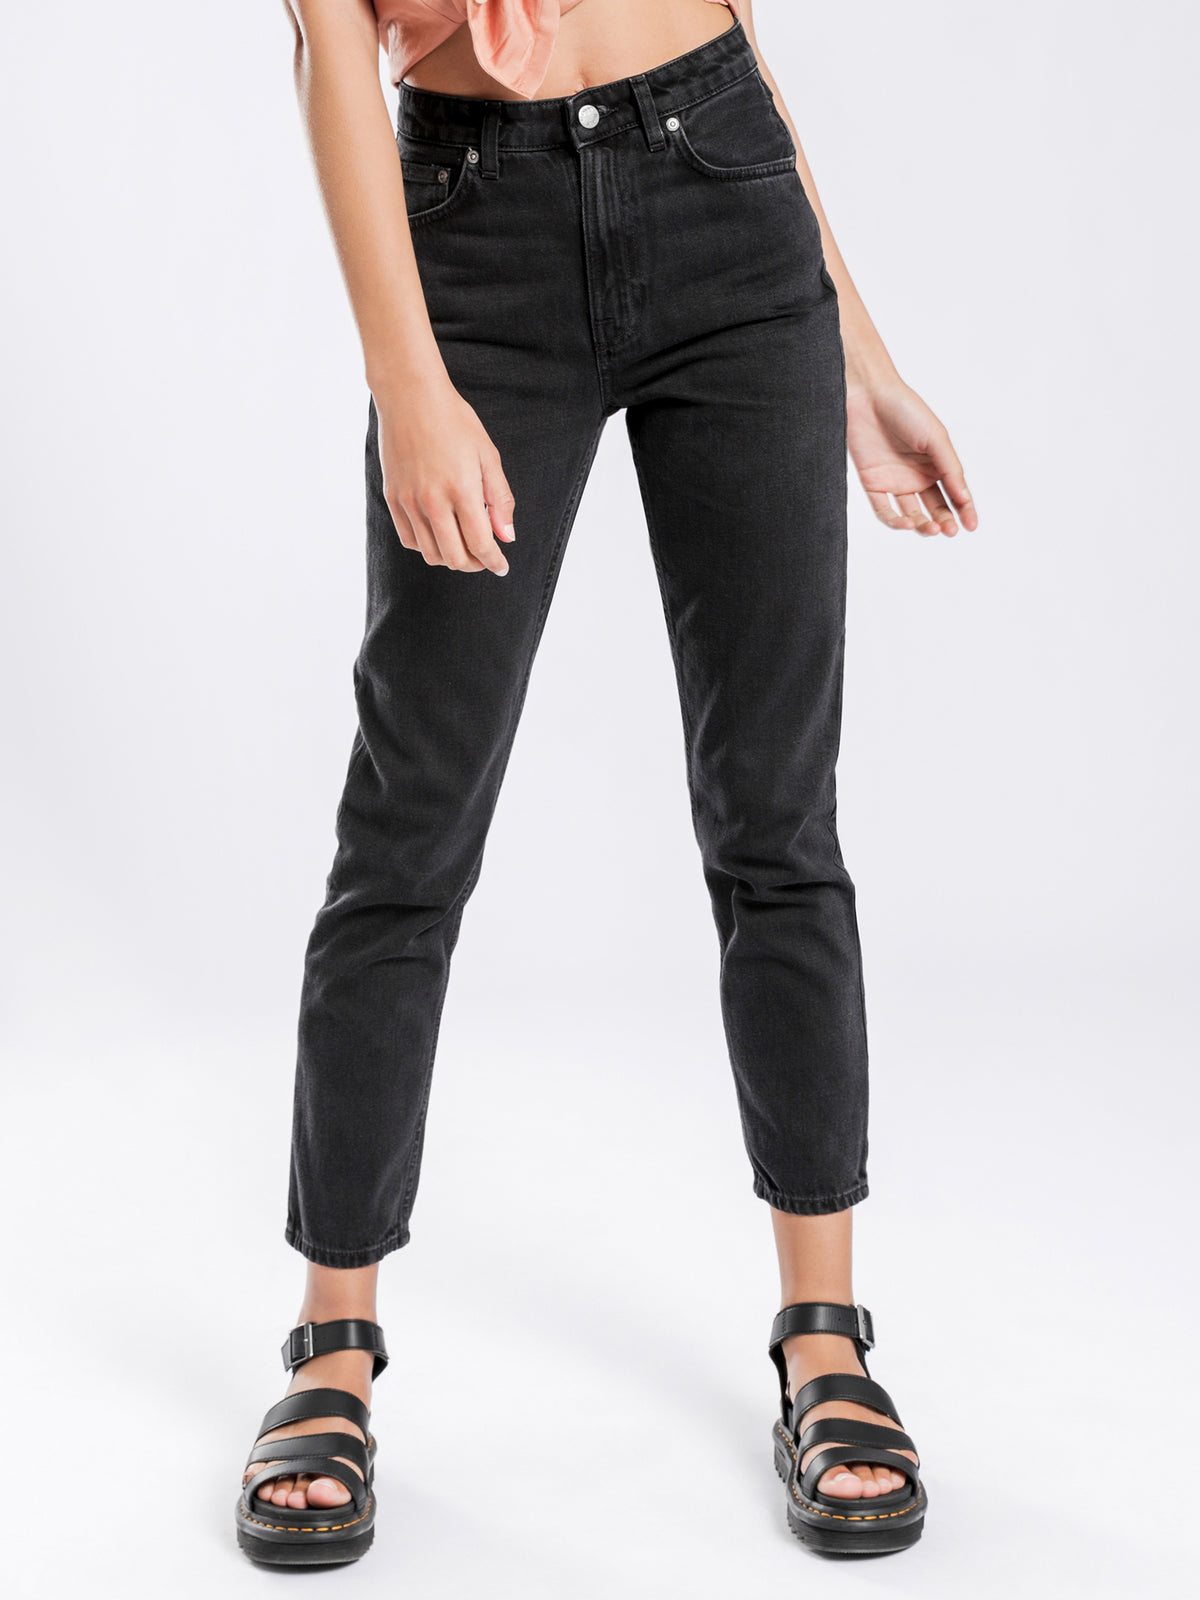 Breezy Britt Slim Jeans in Black Worn